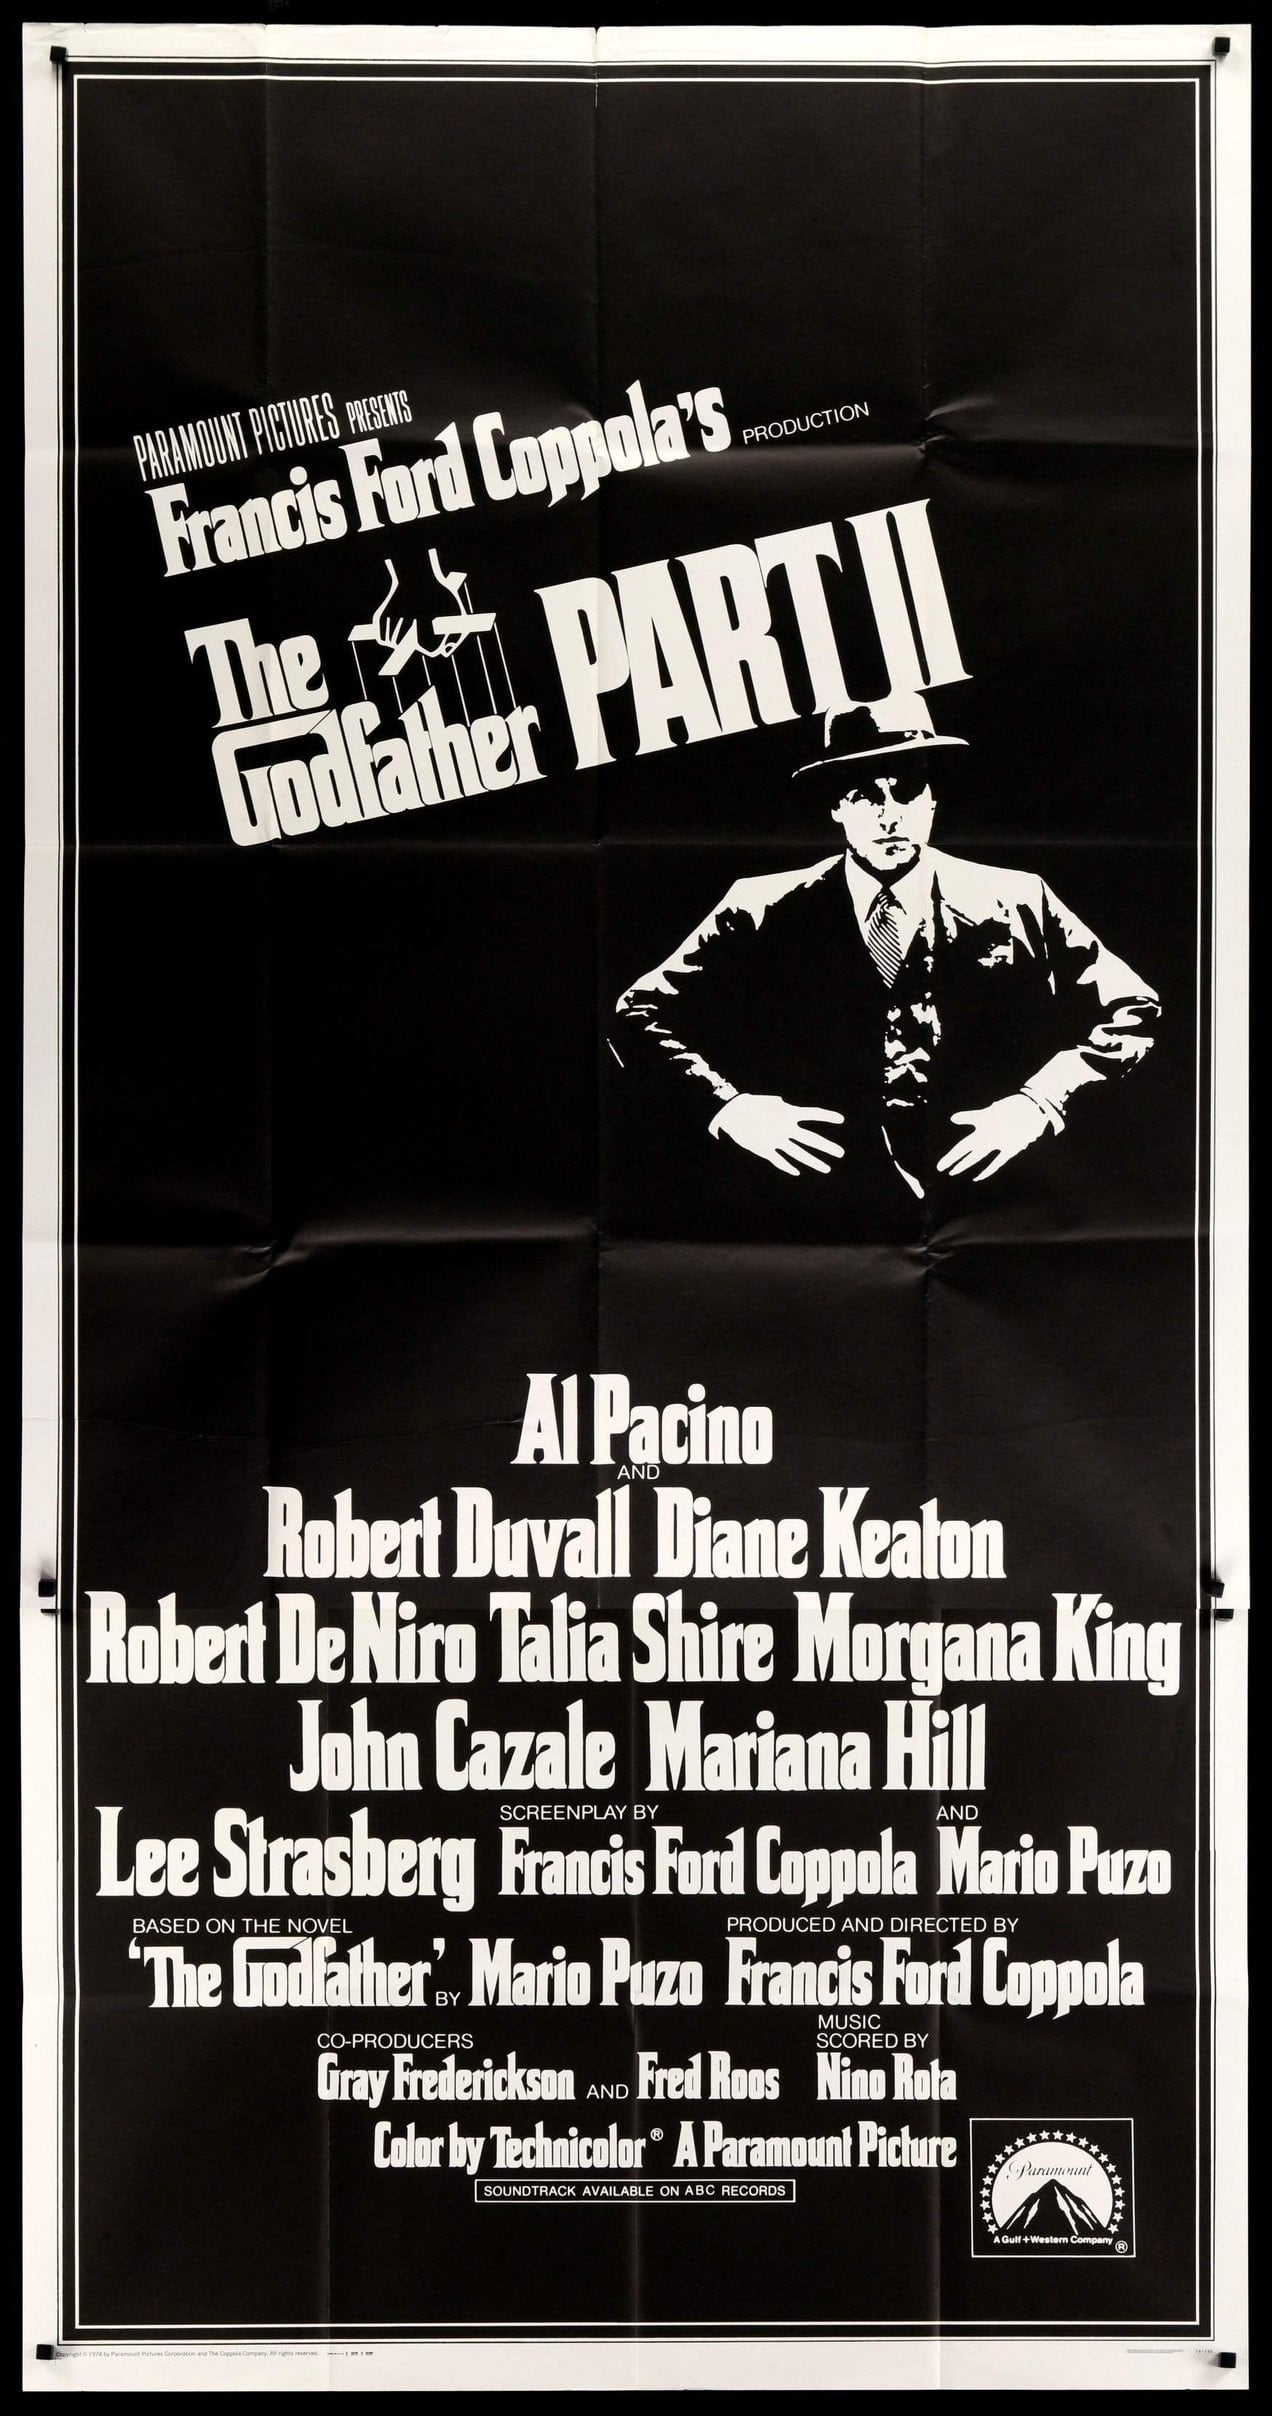 THE GODFATHER PART 3 - Coppola, Pacino - Original French Movie